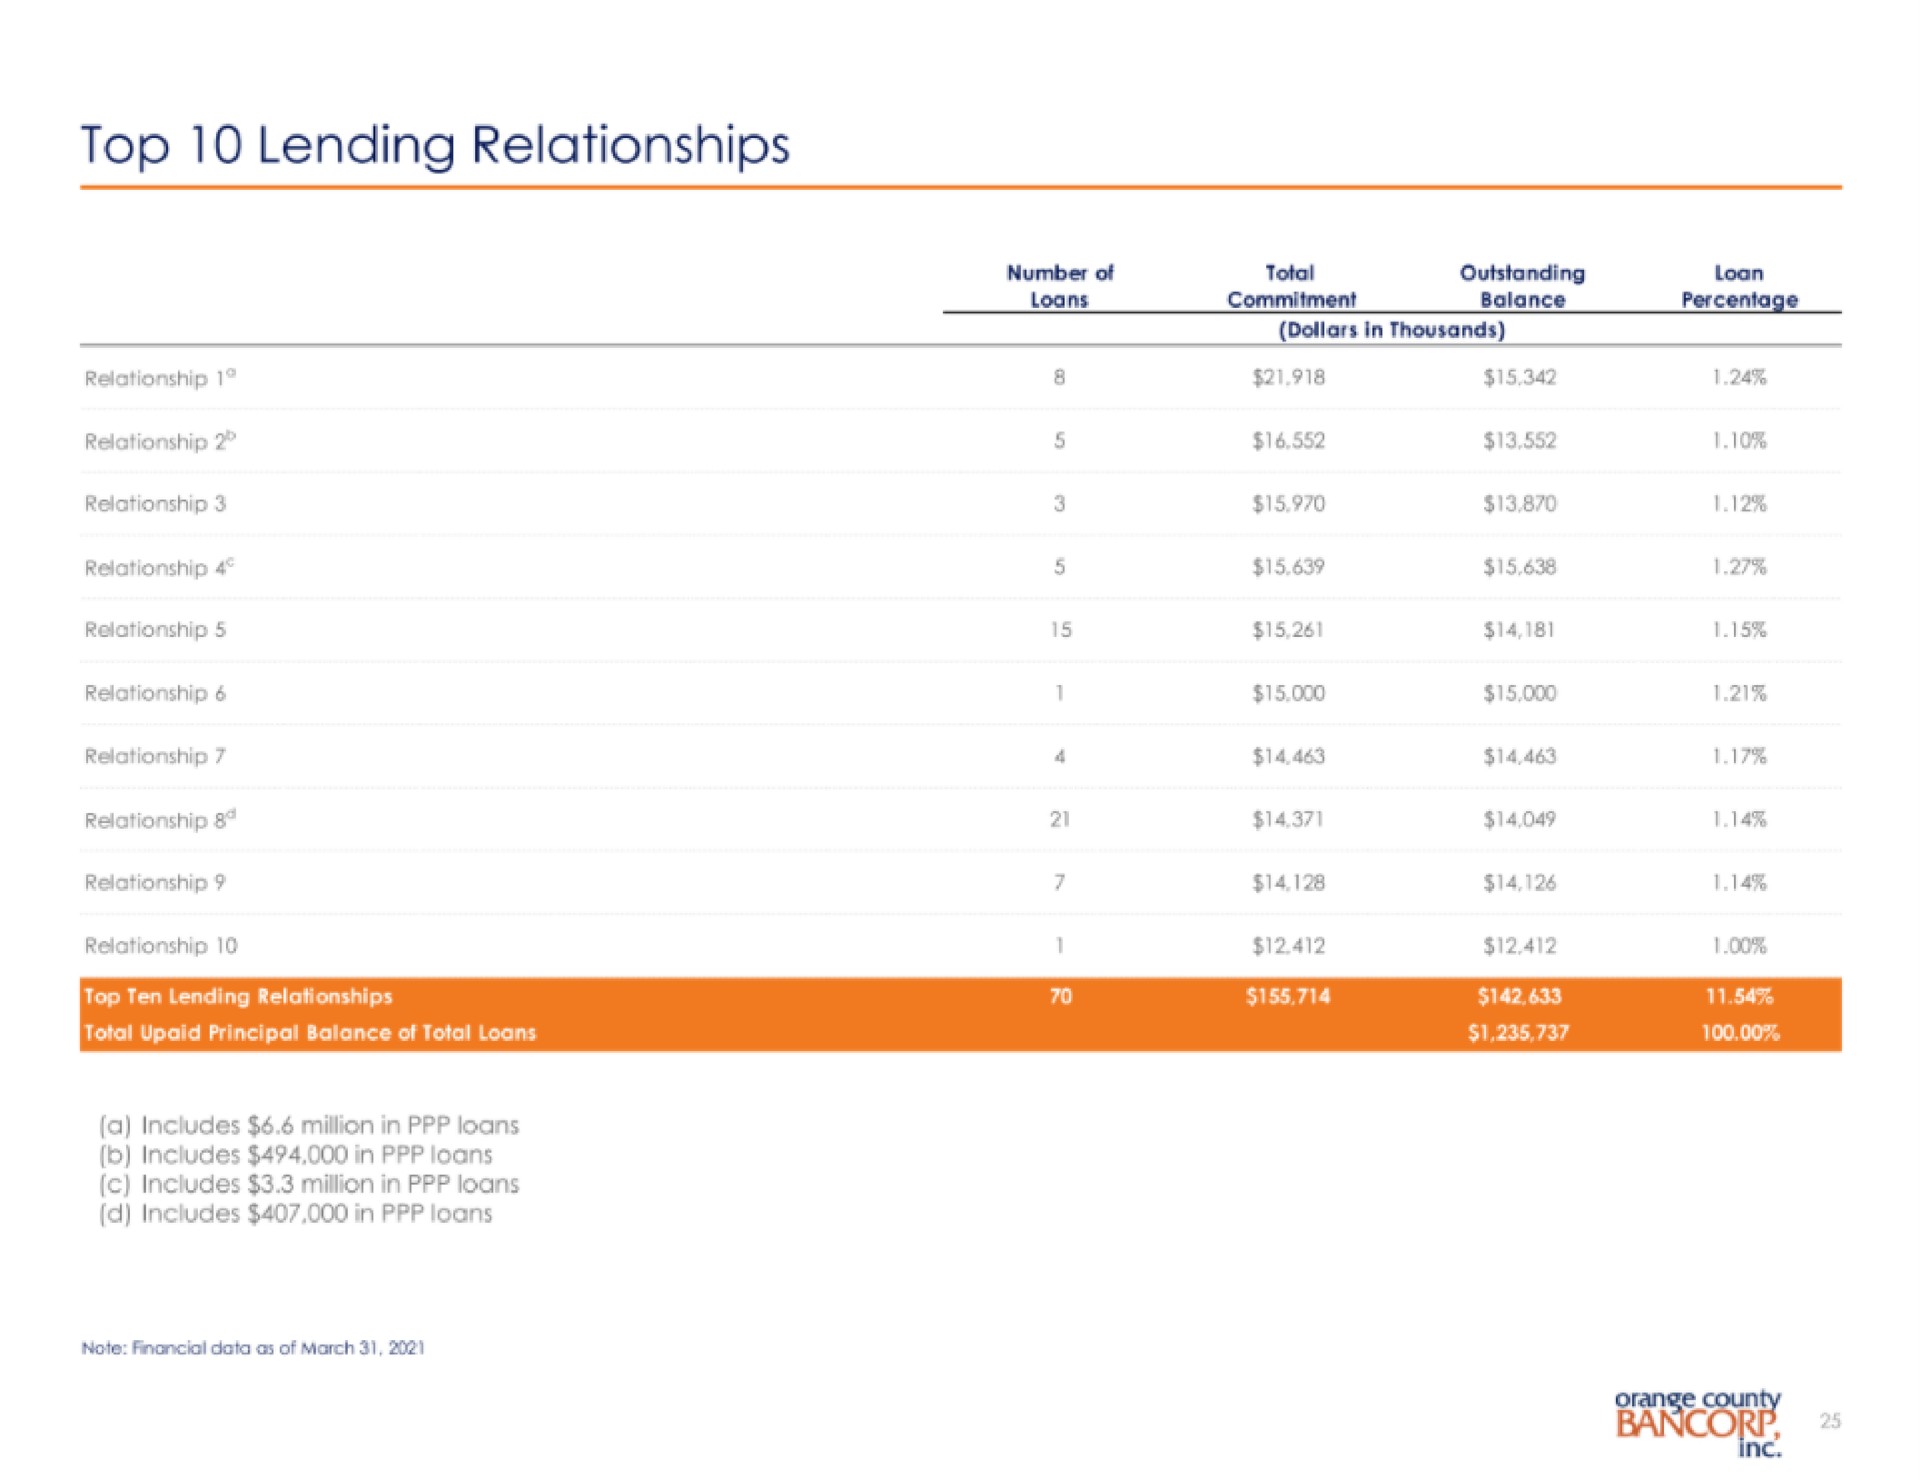 top lending relationships | Orange County Bancorp